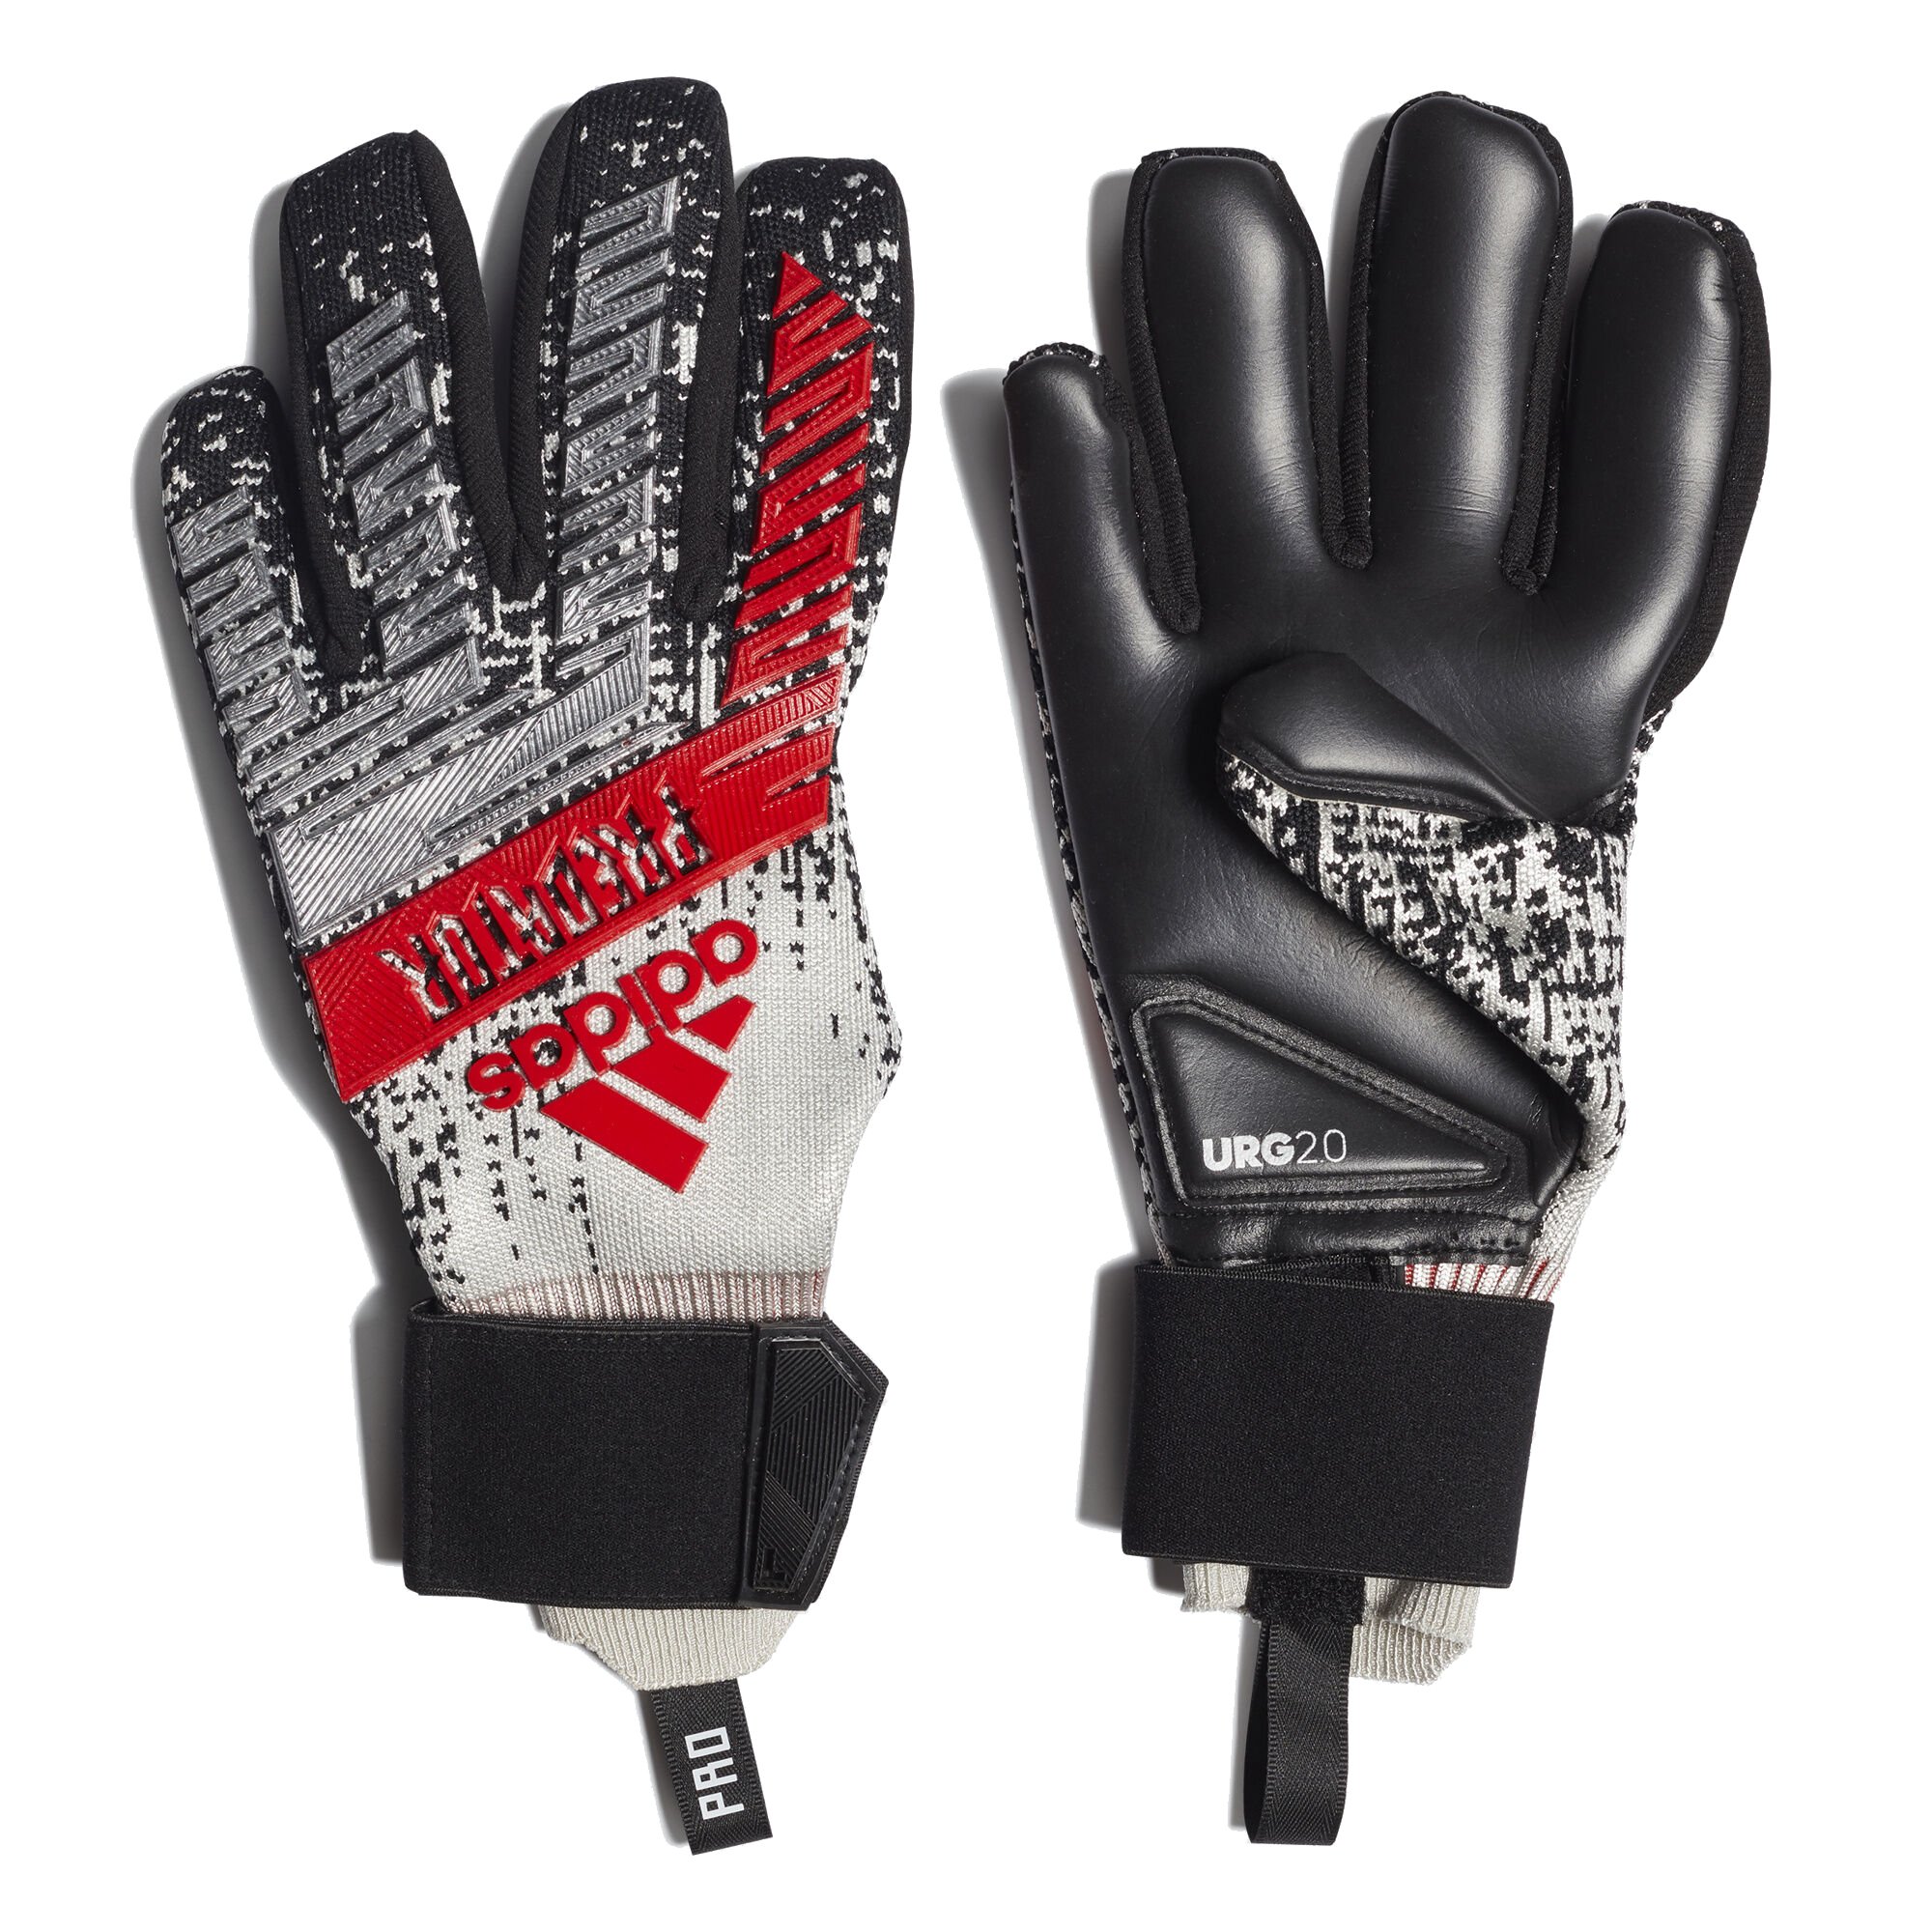 Адидас предатор перчатки. Adidas Predator Pro goalkeeper Gloves. Вратарские перчатки adidas Predator Pro. Вратарские перчатки адидас Predator. Adidas Predator Pro Gloves.